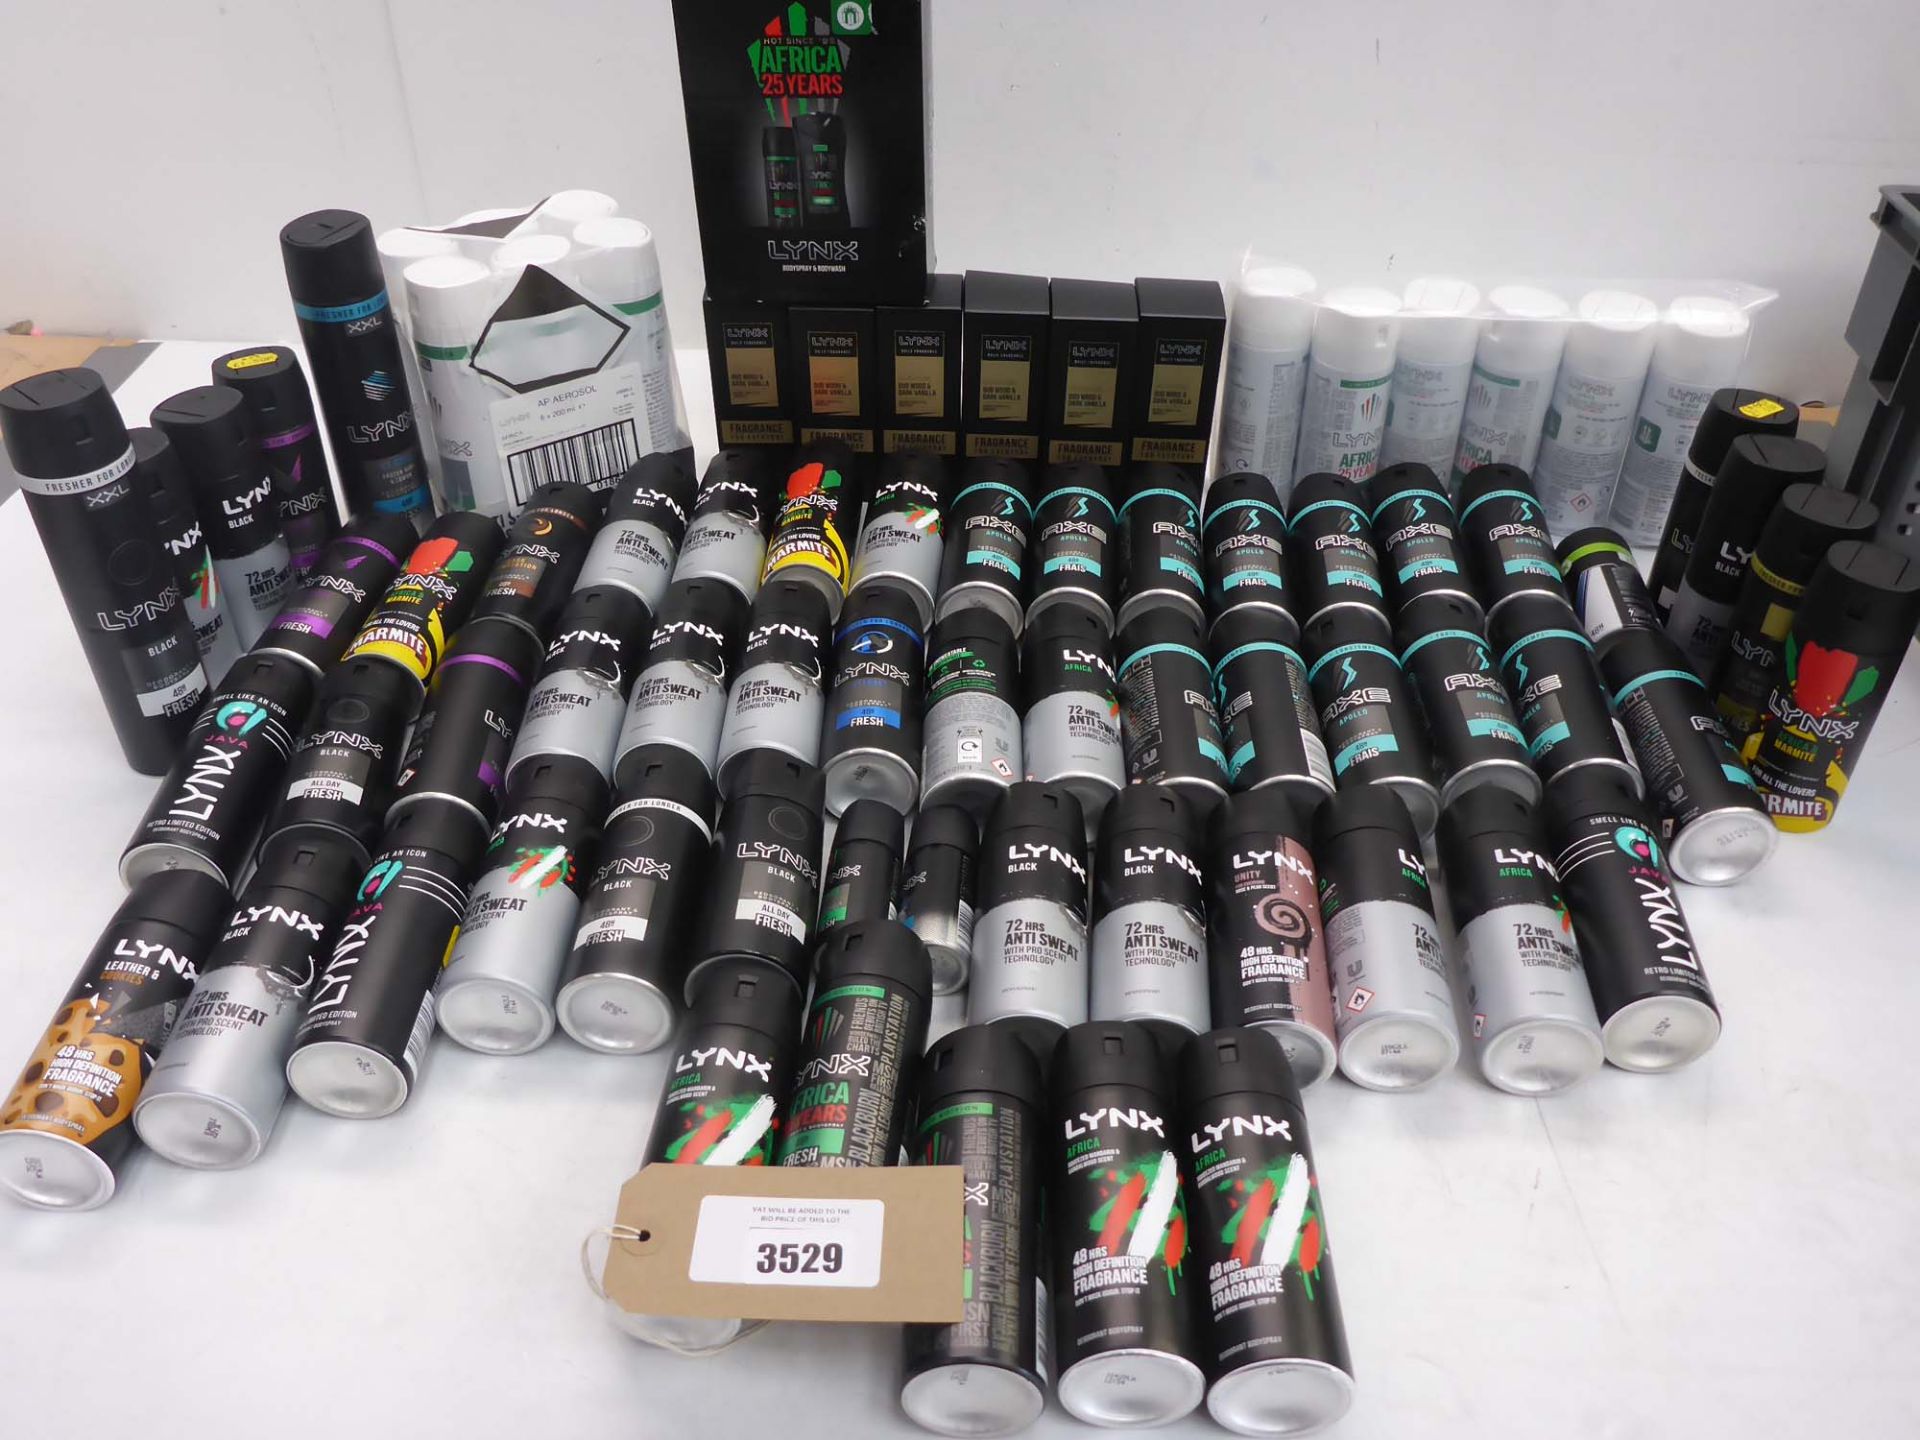 Large quantity of various fragrance Lynx deodorants